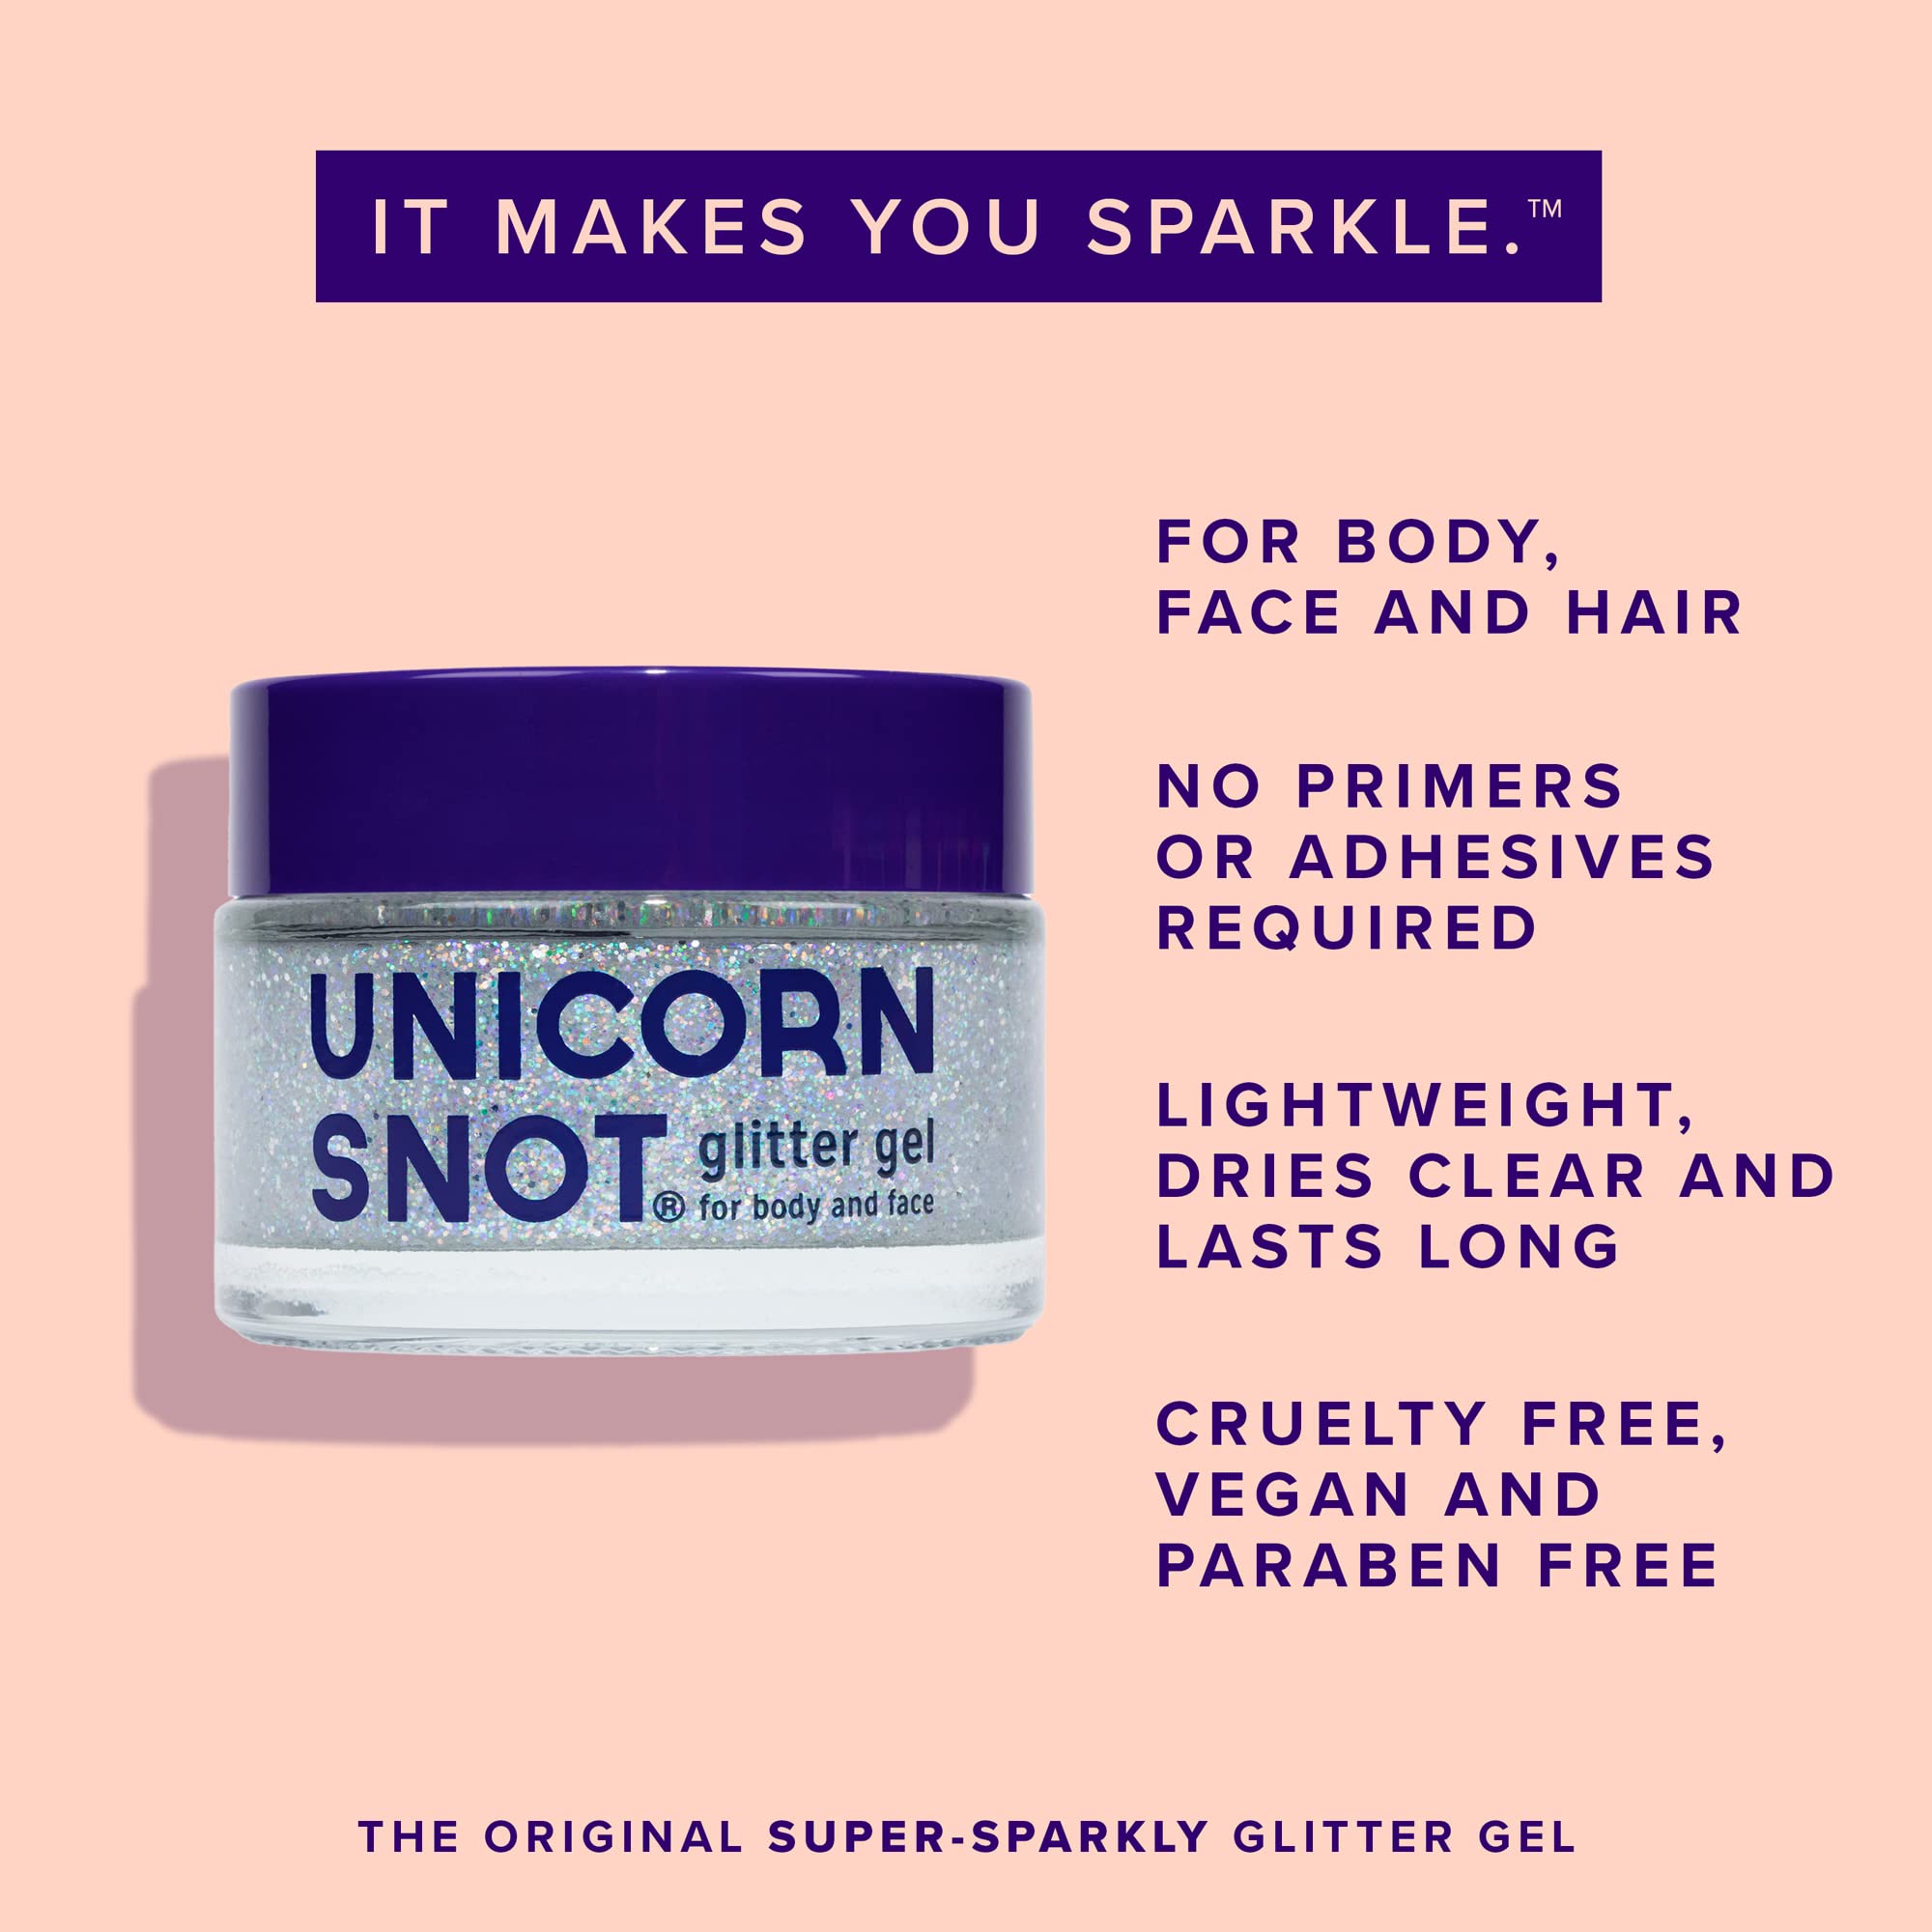 Unicorn Snot Holographic Body Glitter Gel for Body, Face, Hair - Vegan & Cruelty Free - 1.7 oz (Disco)